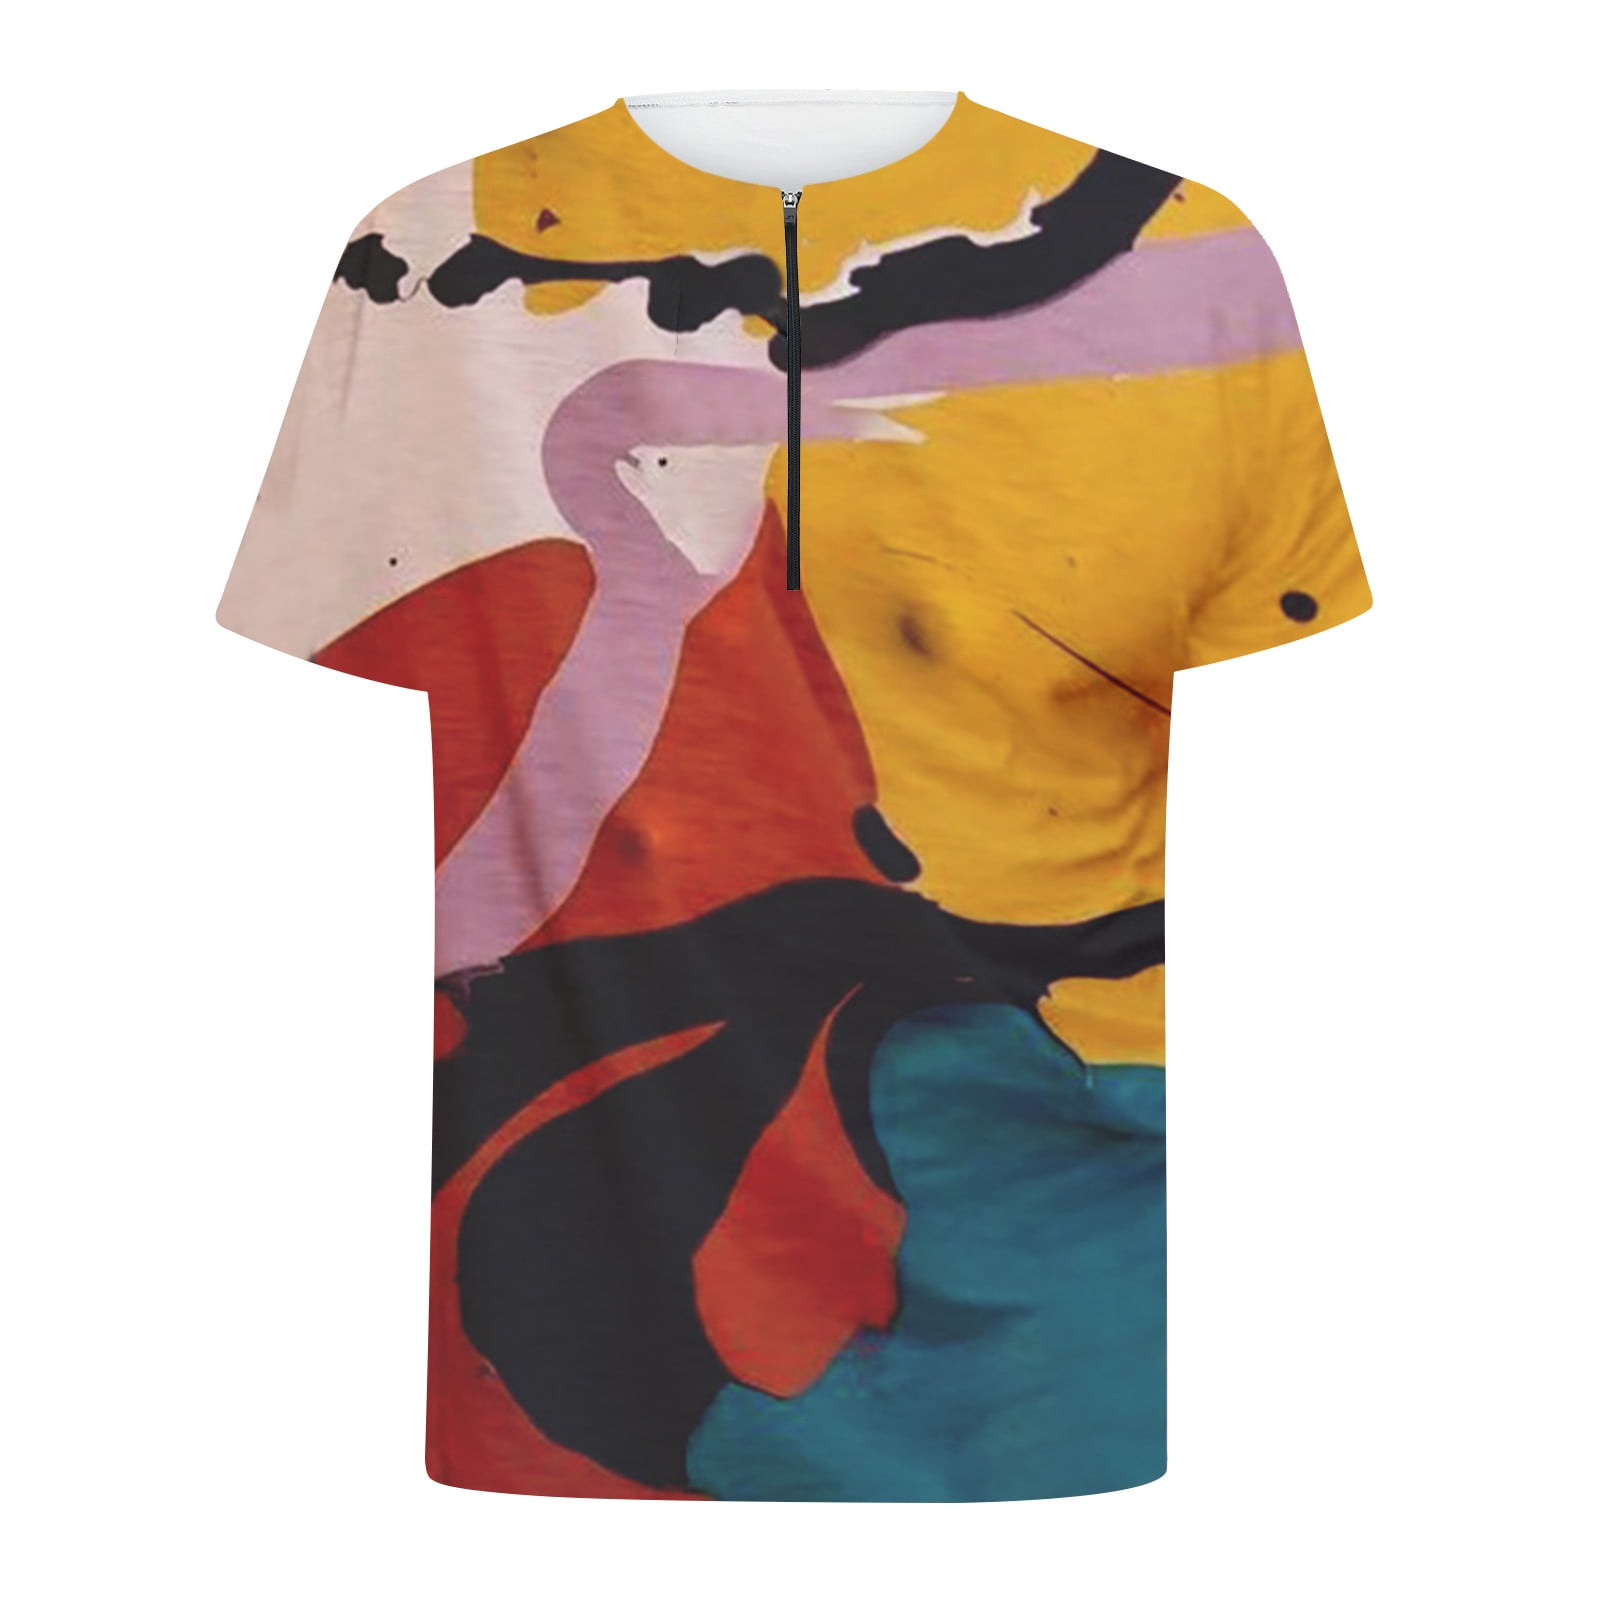 Tee Shirts for Men Graphic Tees Men's Shirt Short Sleeve 3D Digital ...